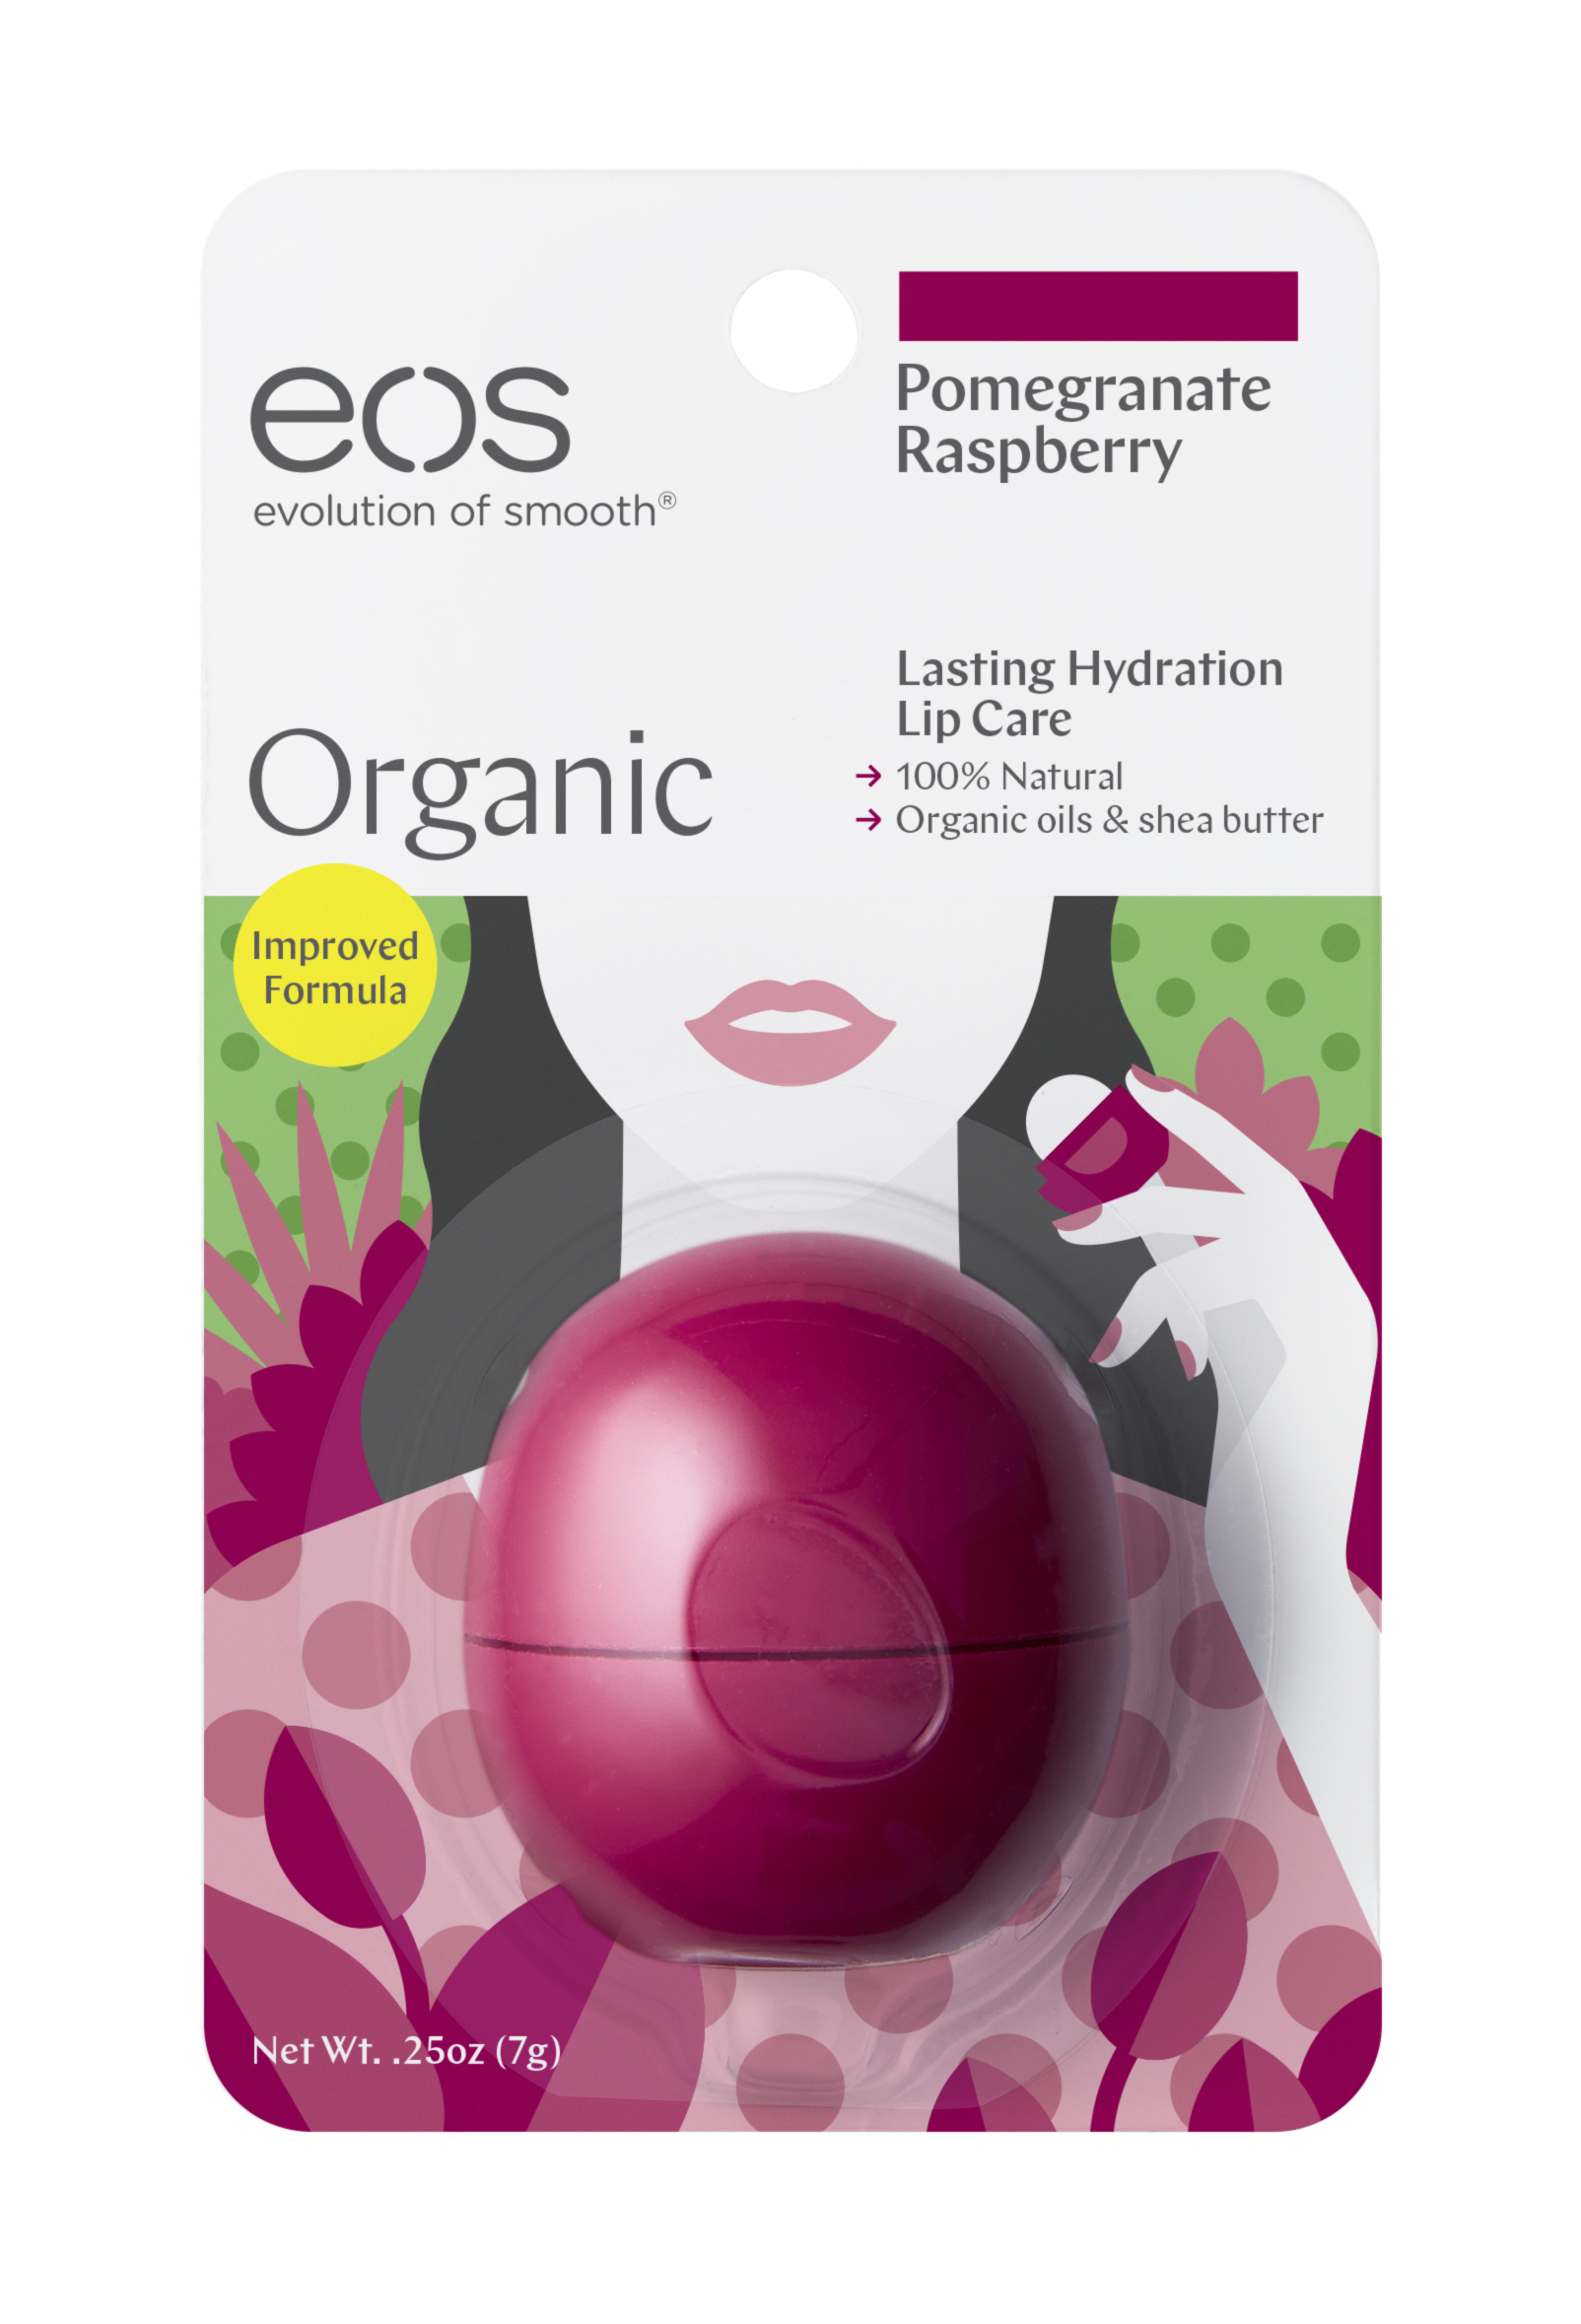 eos Organic Lip Balm, Pomegranate Raspberry - image 2 of 6